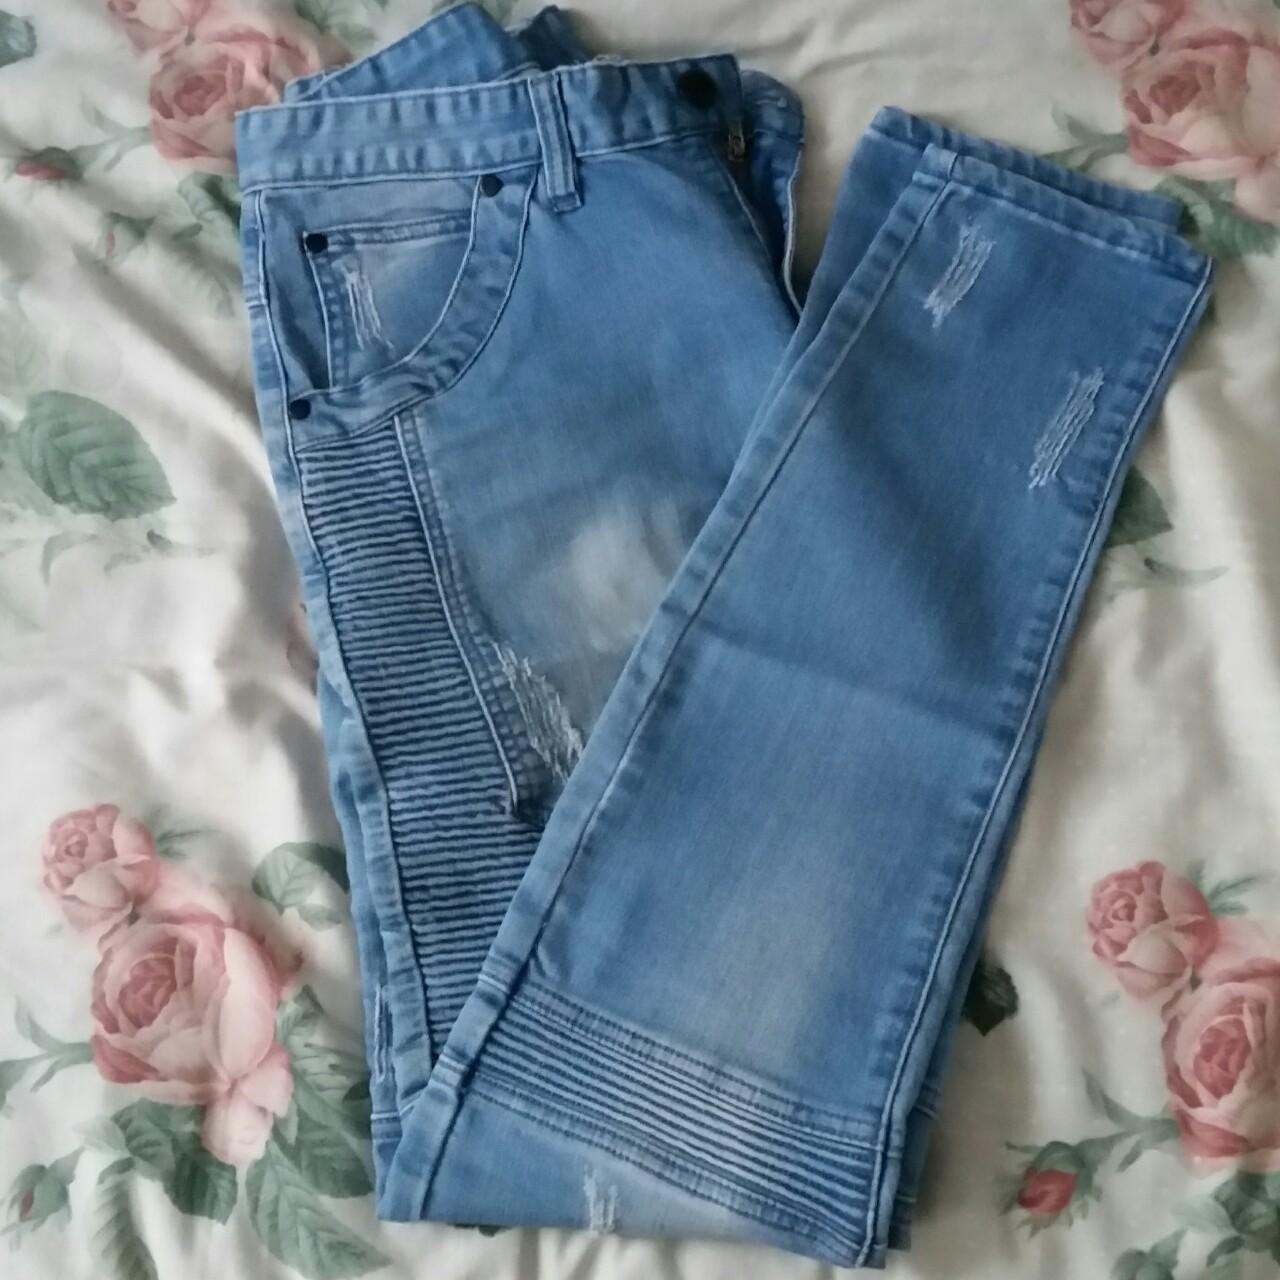 Product Image 2 - Represent biker jeans 
100% authentic